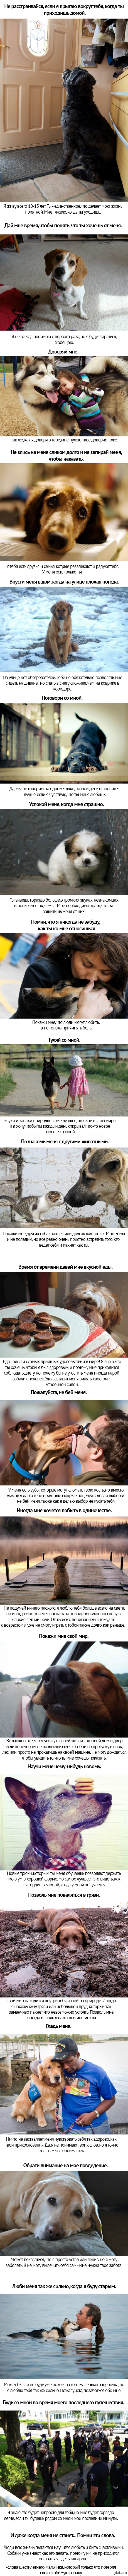 http://s6.pikabu.ru/post_img/2014/02/21/9/1392992197_157831638.jpg